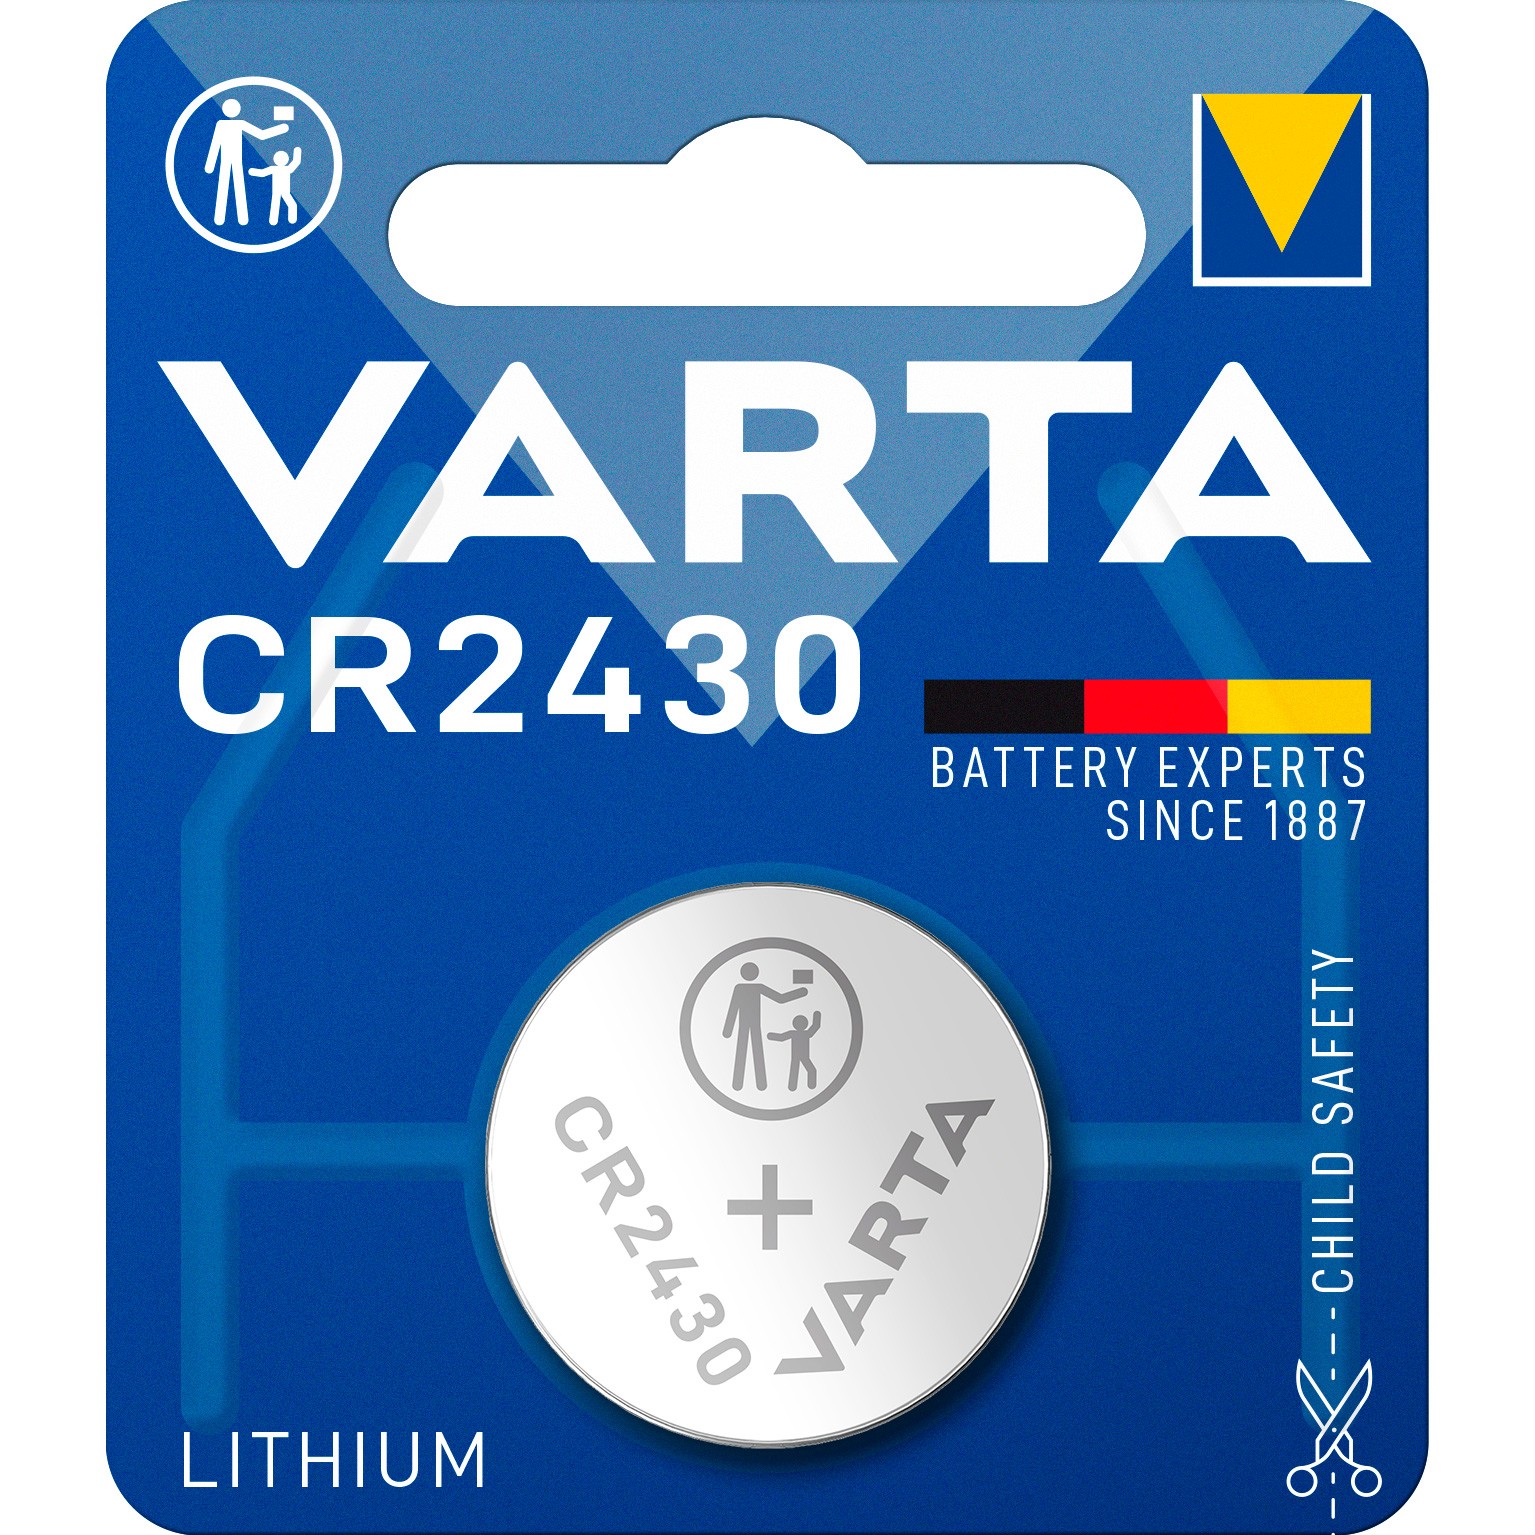 VARTA knapcellebatteri CR2430 1 stk